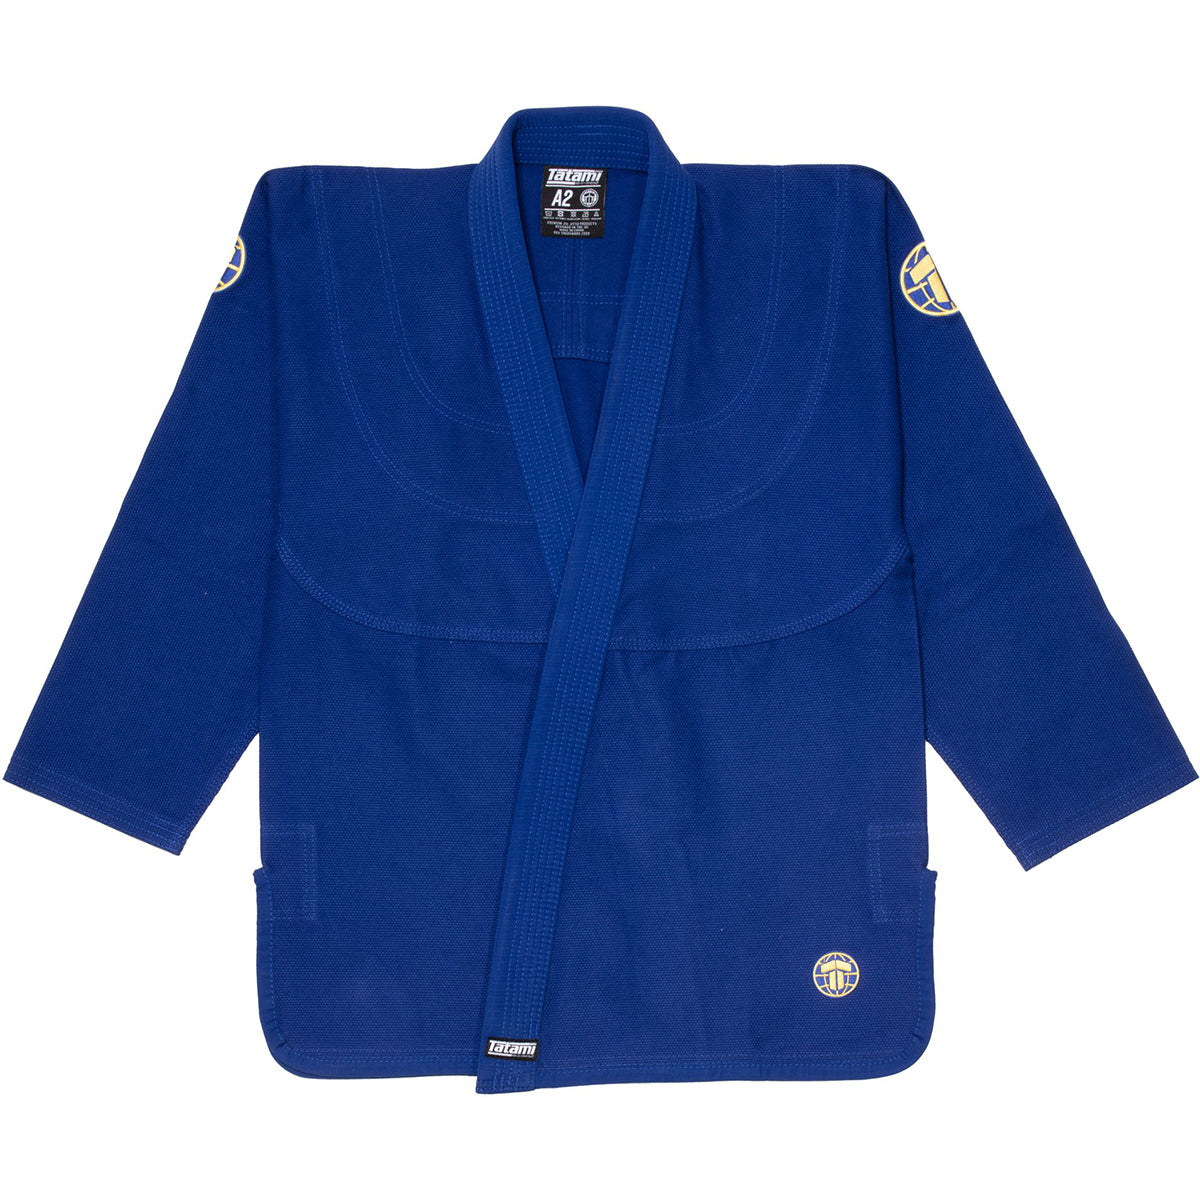 Tatami Fightwear Leve BJJ Gi - Blue Tatami Fightwear